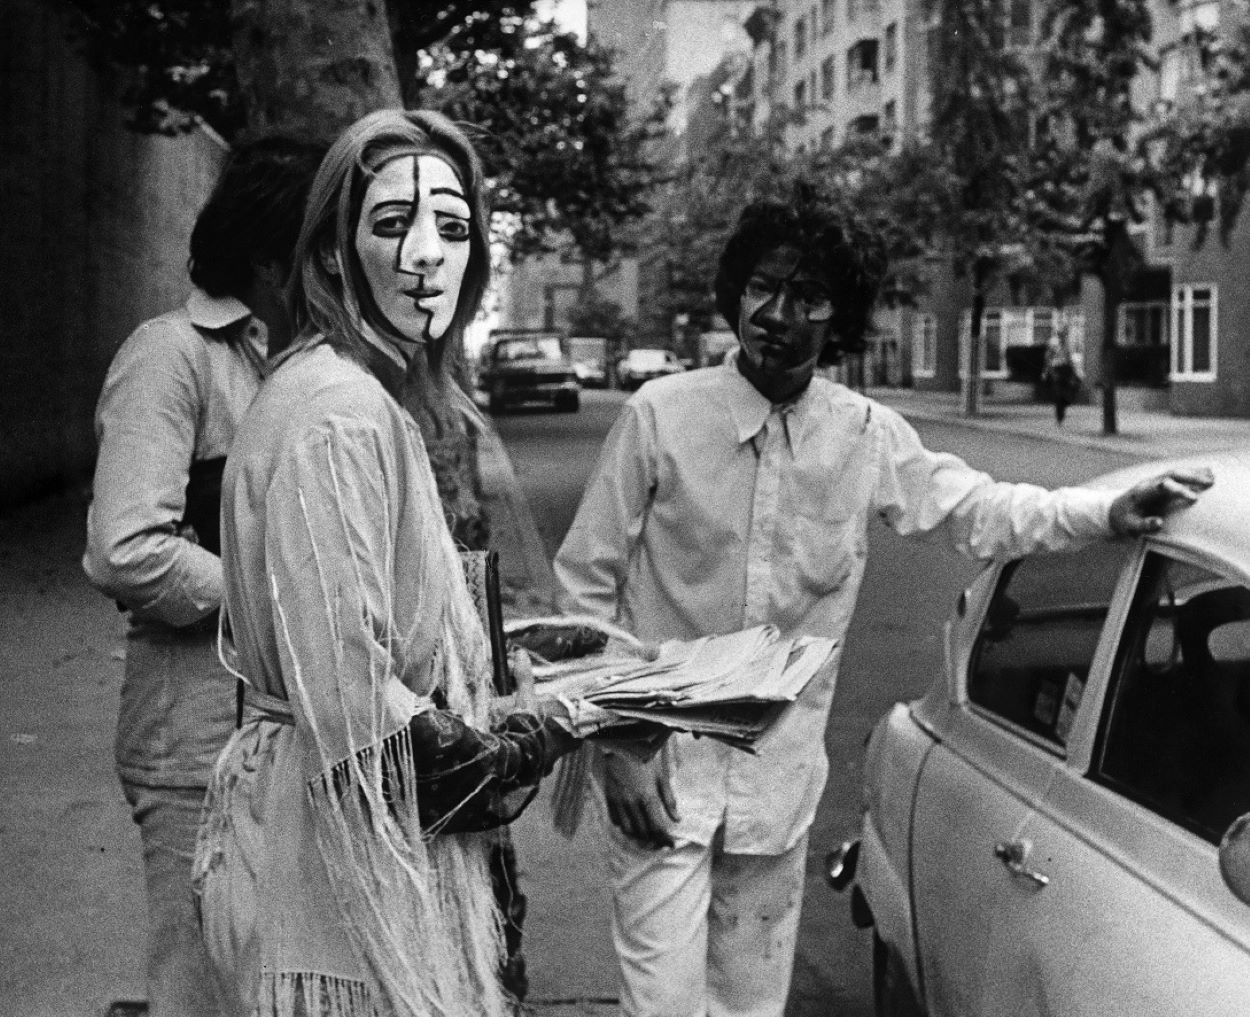 Marta Minujín, “Kidnapping,” (1973), photographic and ephemera documentation of Happening (courtesy of Marta Minujín Archive and Herlitzka + Faria)